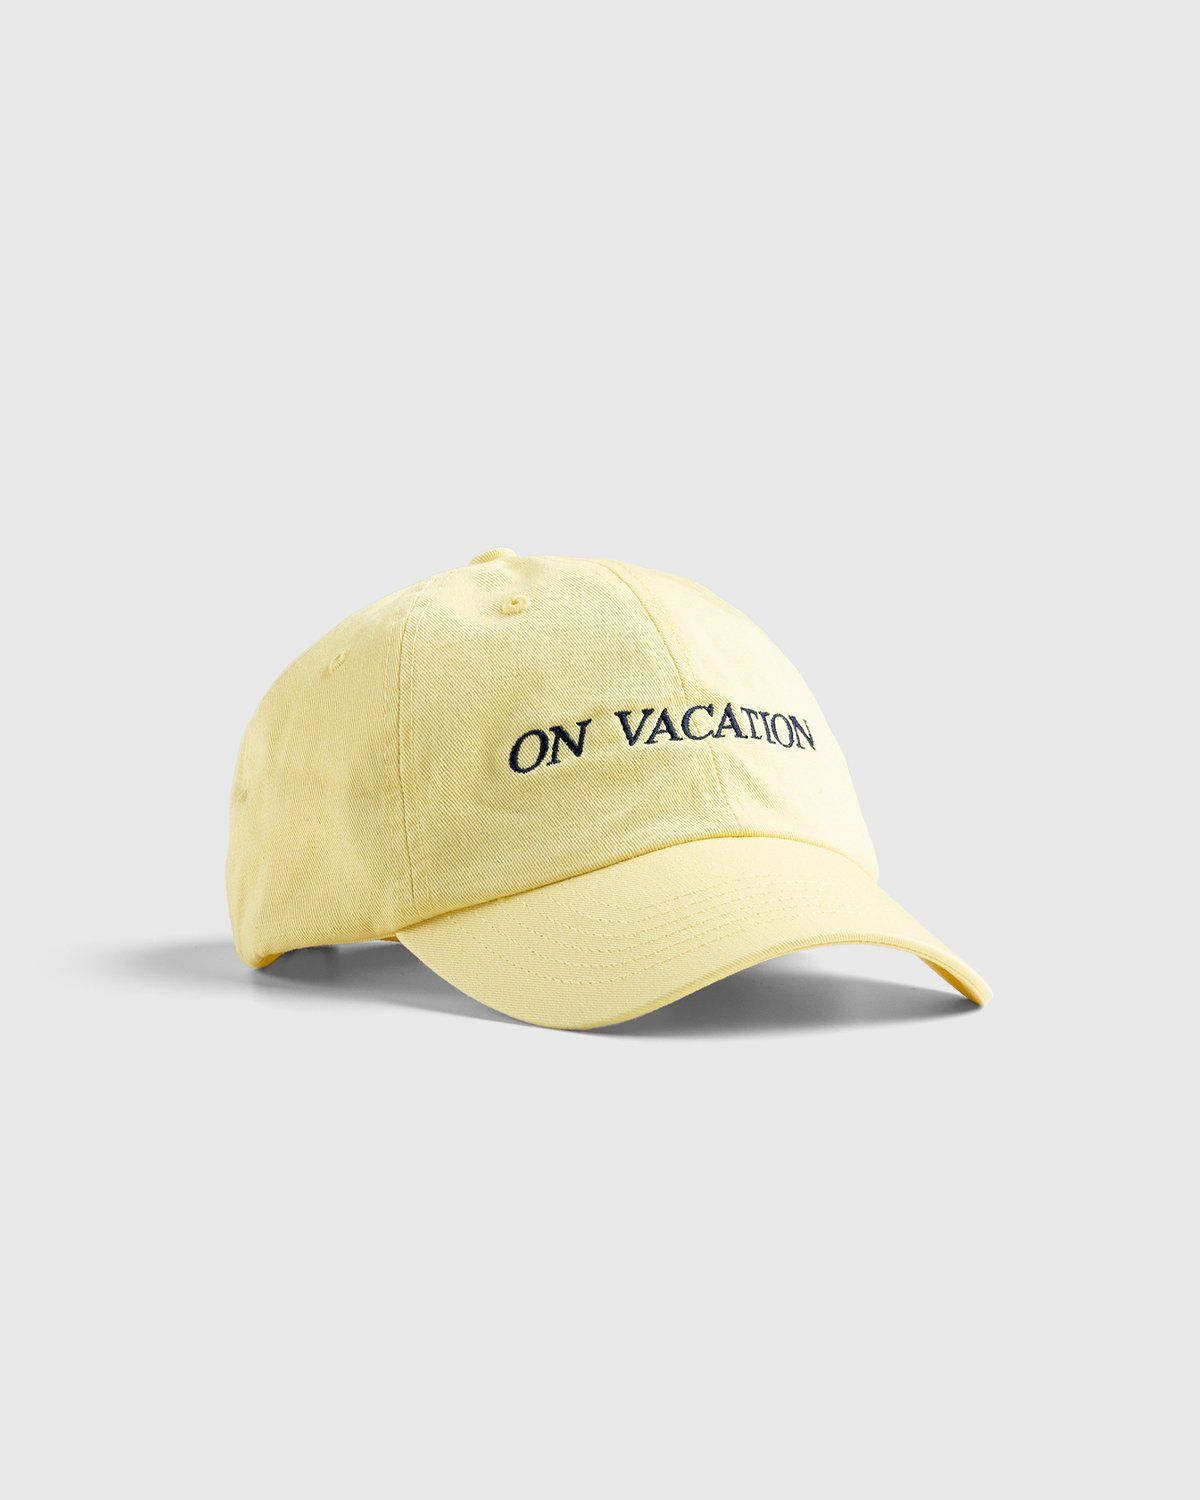 HO HO COCO – On Vacation Cap Yellow - Hats - Yellow - Image 1